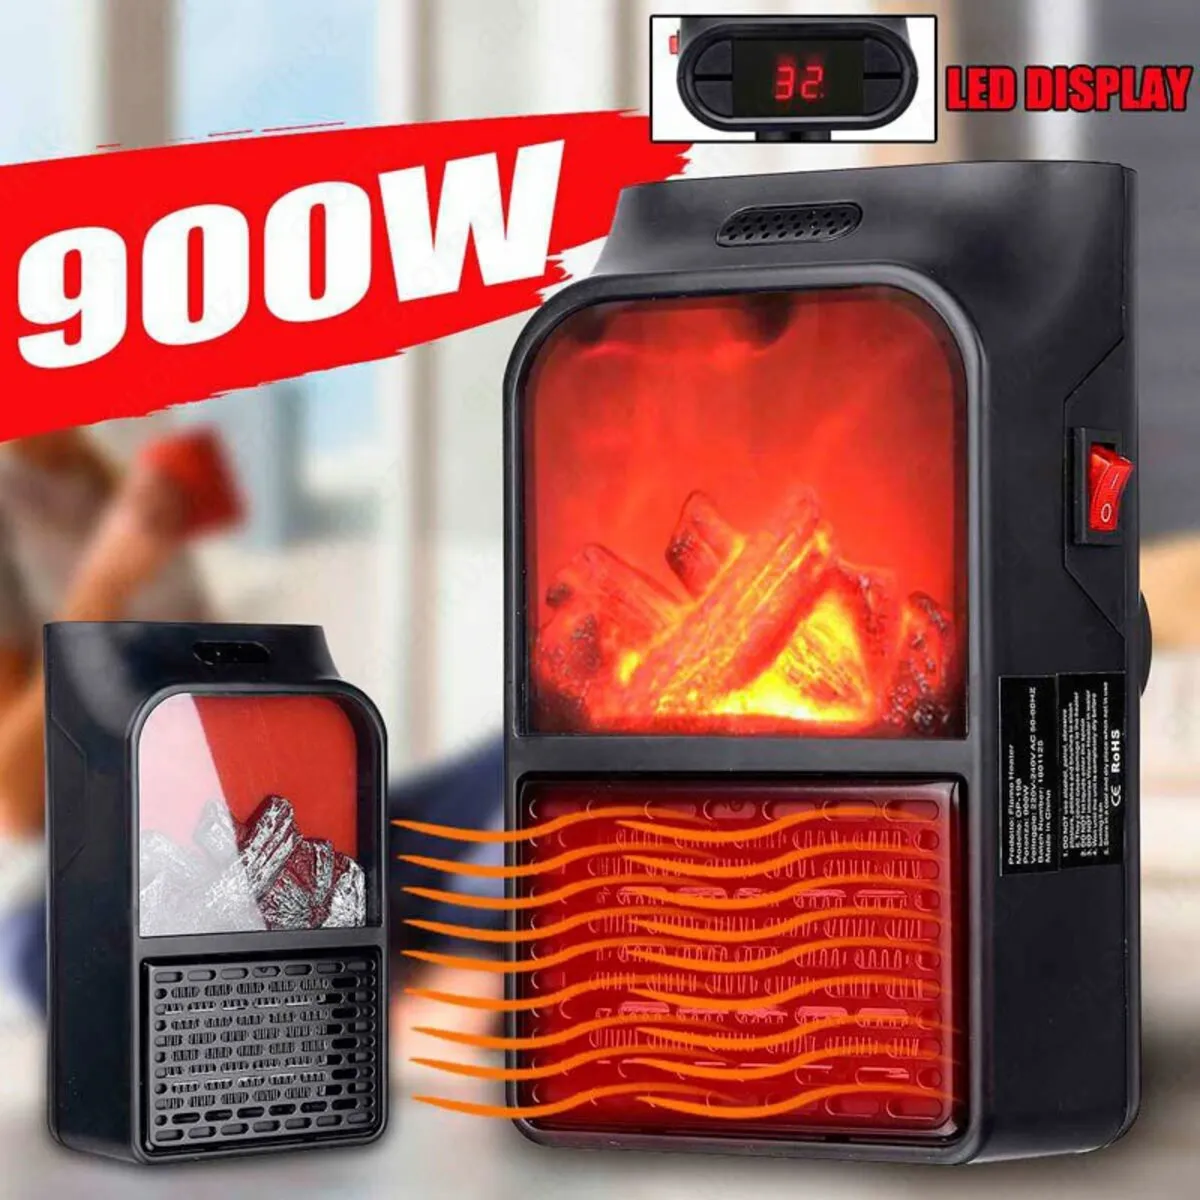 Мини обогреватель с камином Flame handy heater (900 Ватт)#4